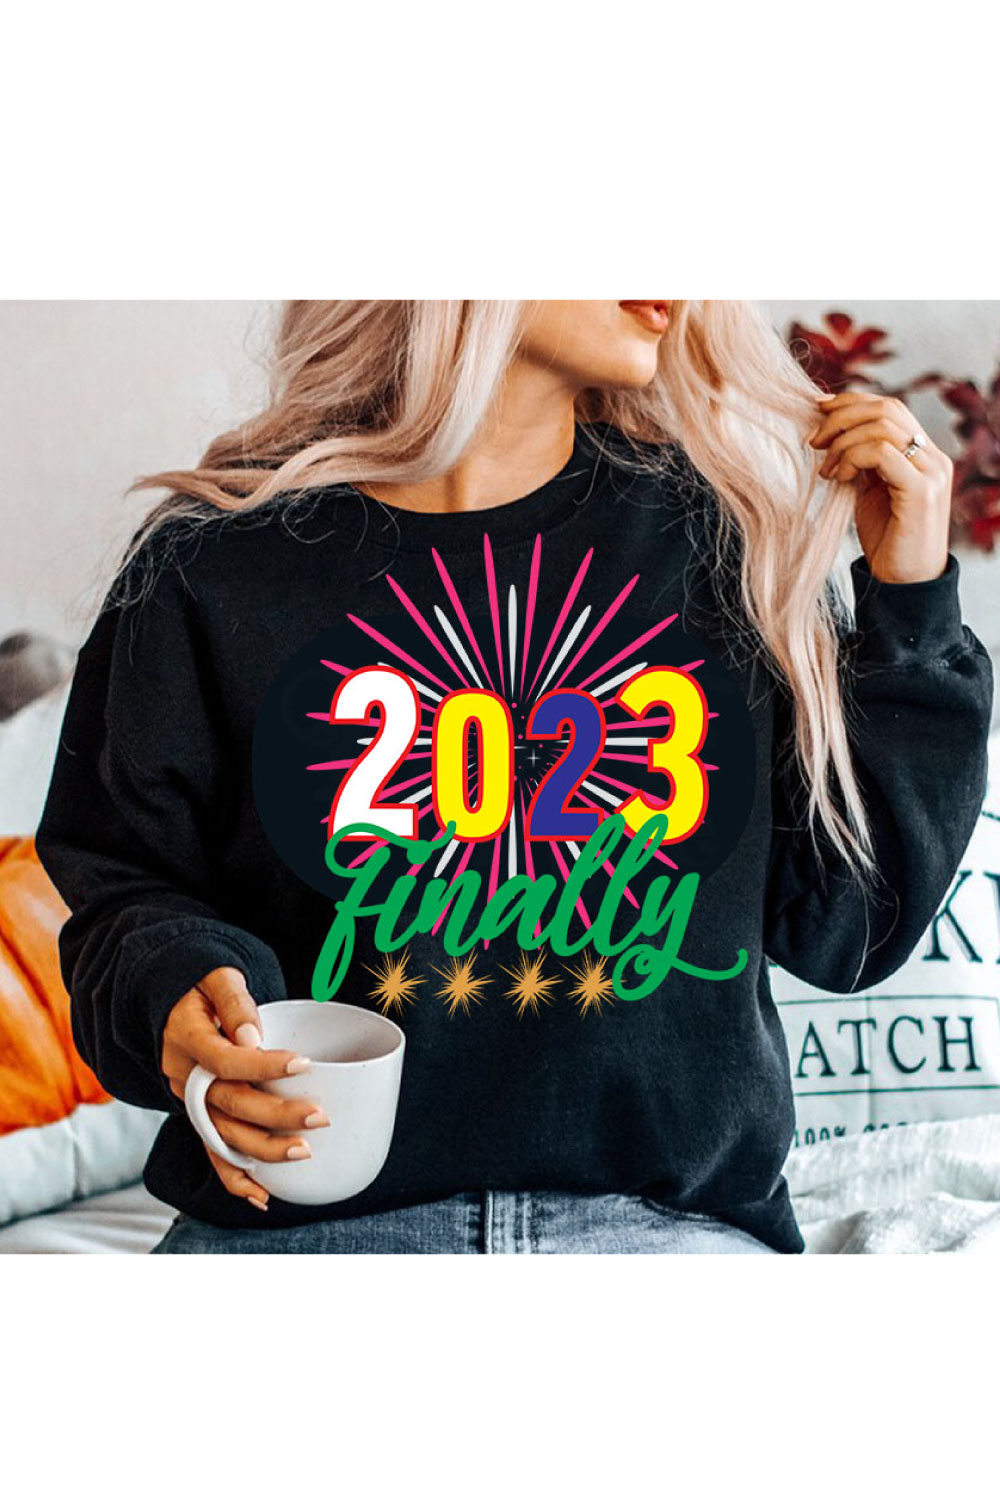 Image of a black sweatshirt with an irresistible slogan 2023 Finally.